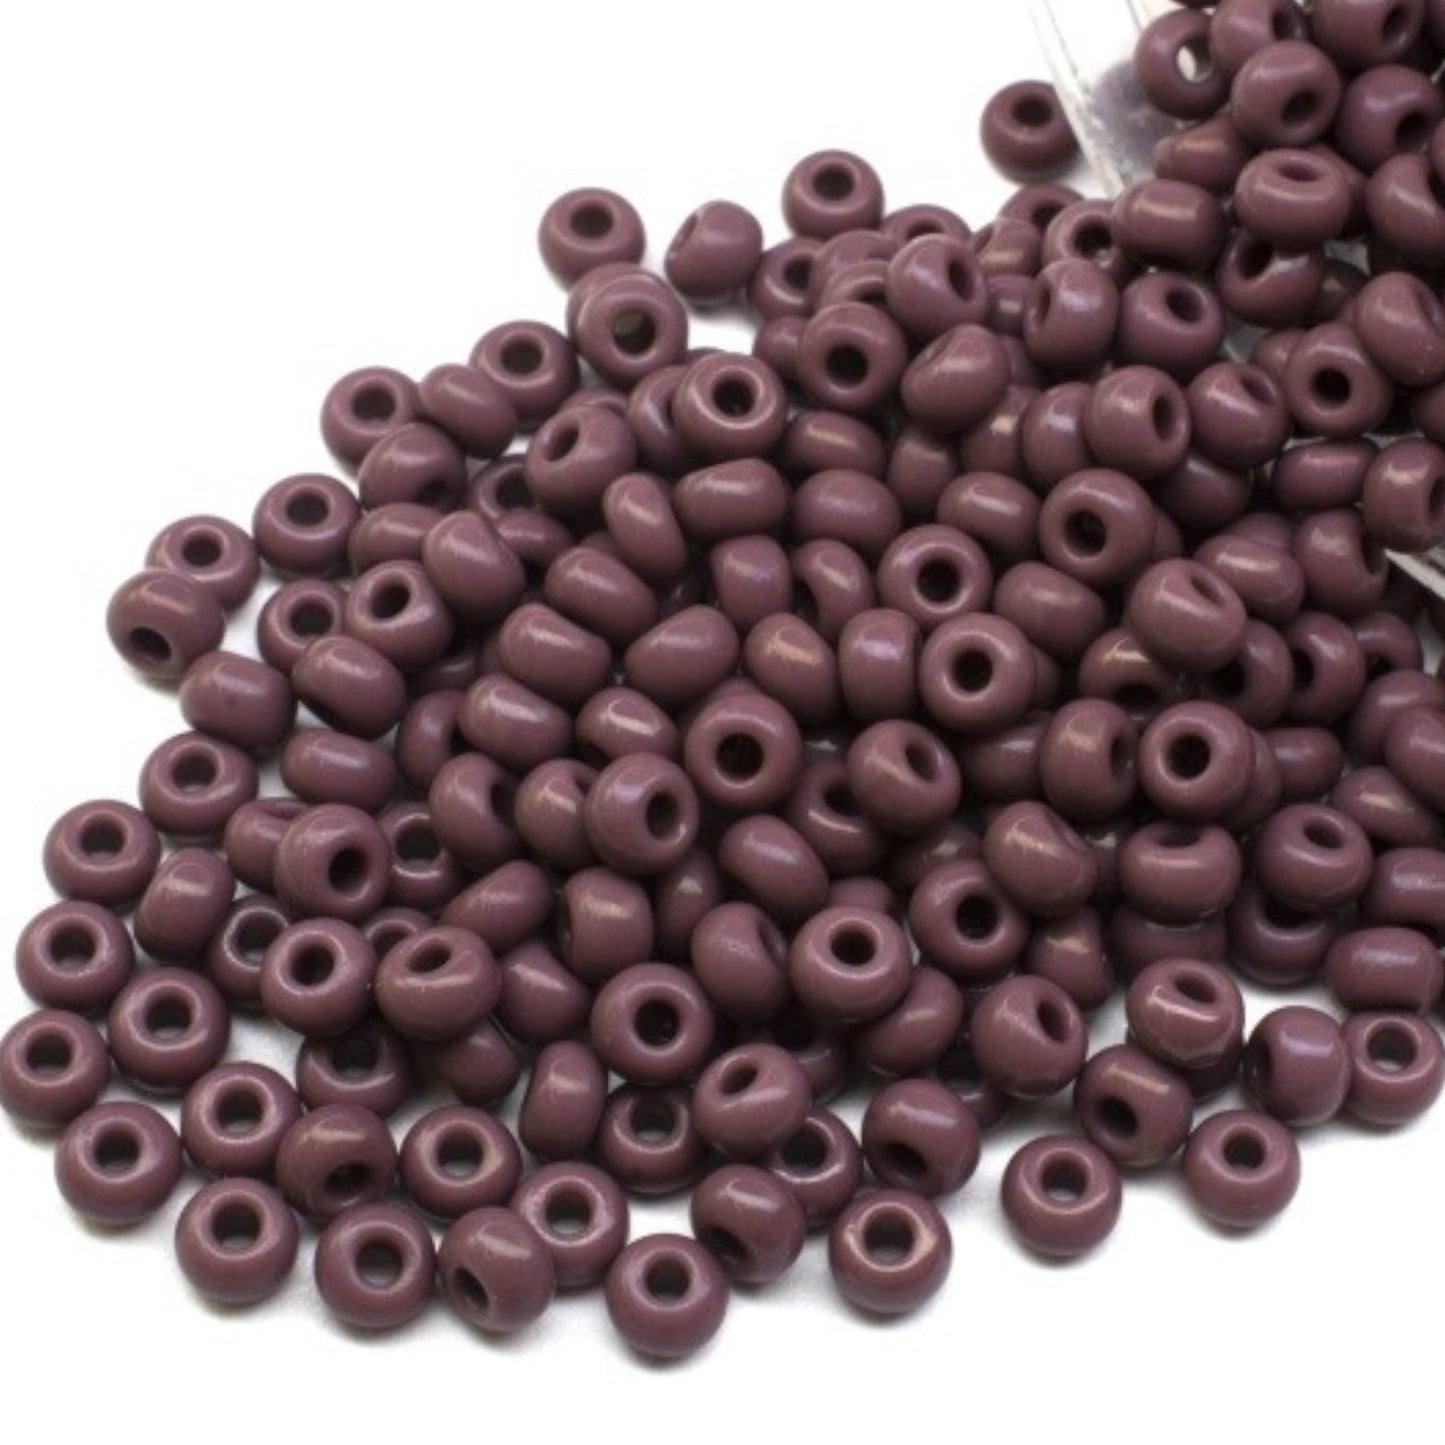 23040_6/0 Czech Seed Beads Preciosa Ornella Rocailes Opaque, size: 6/0.